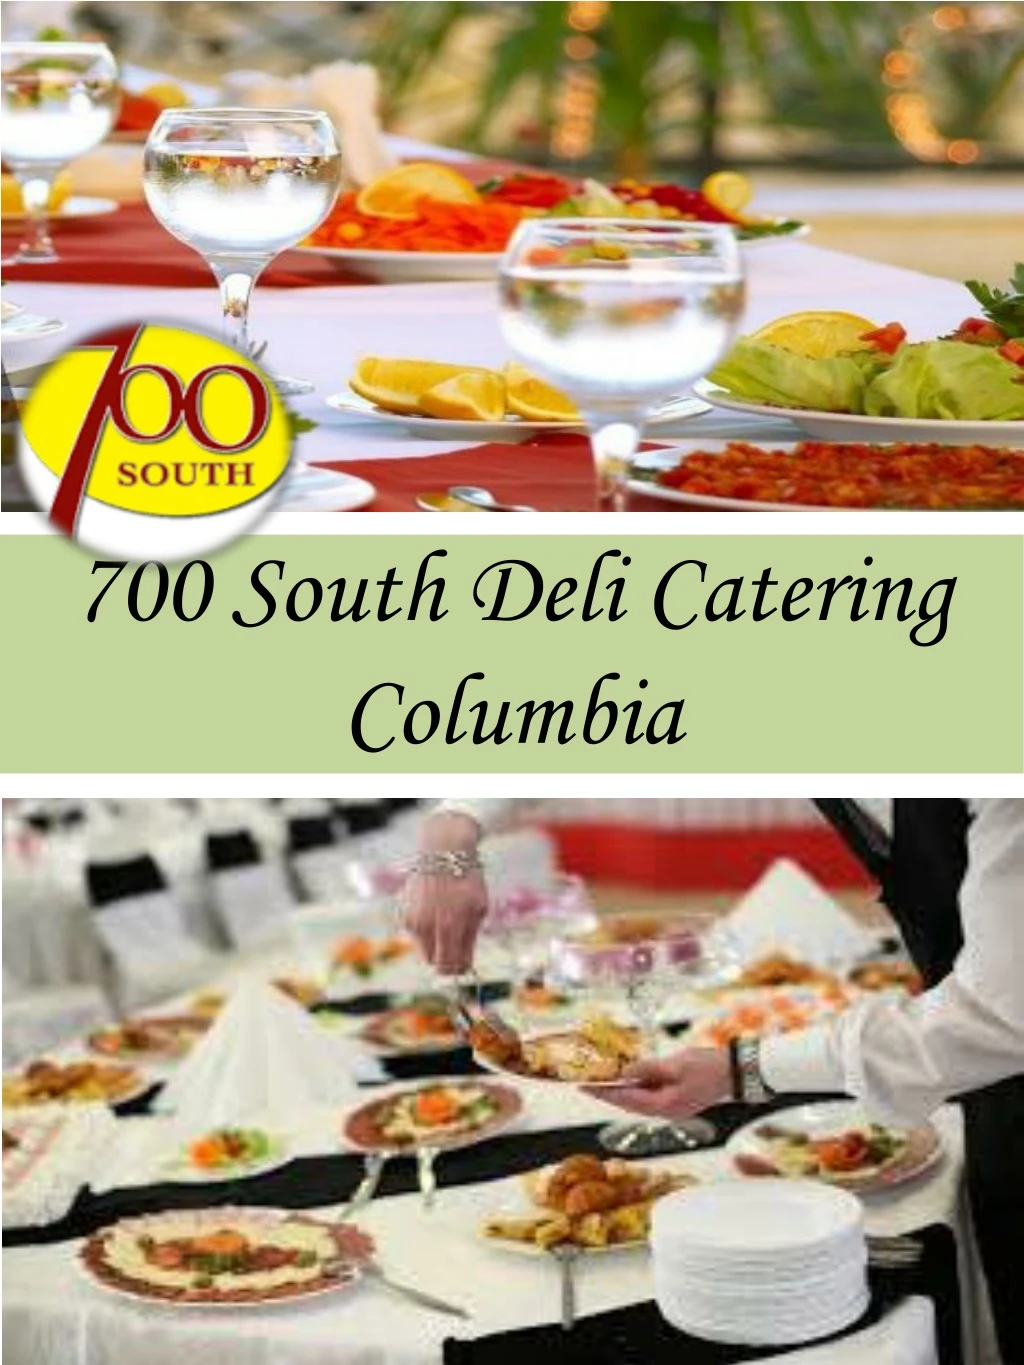 700 south deli catering columbia